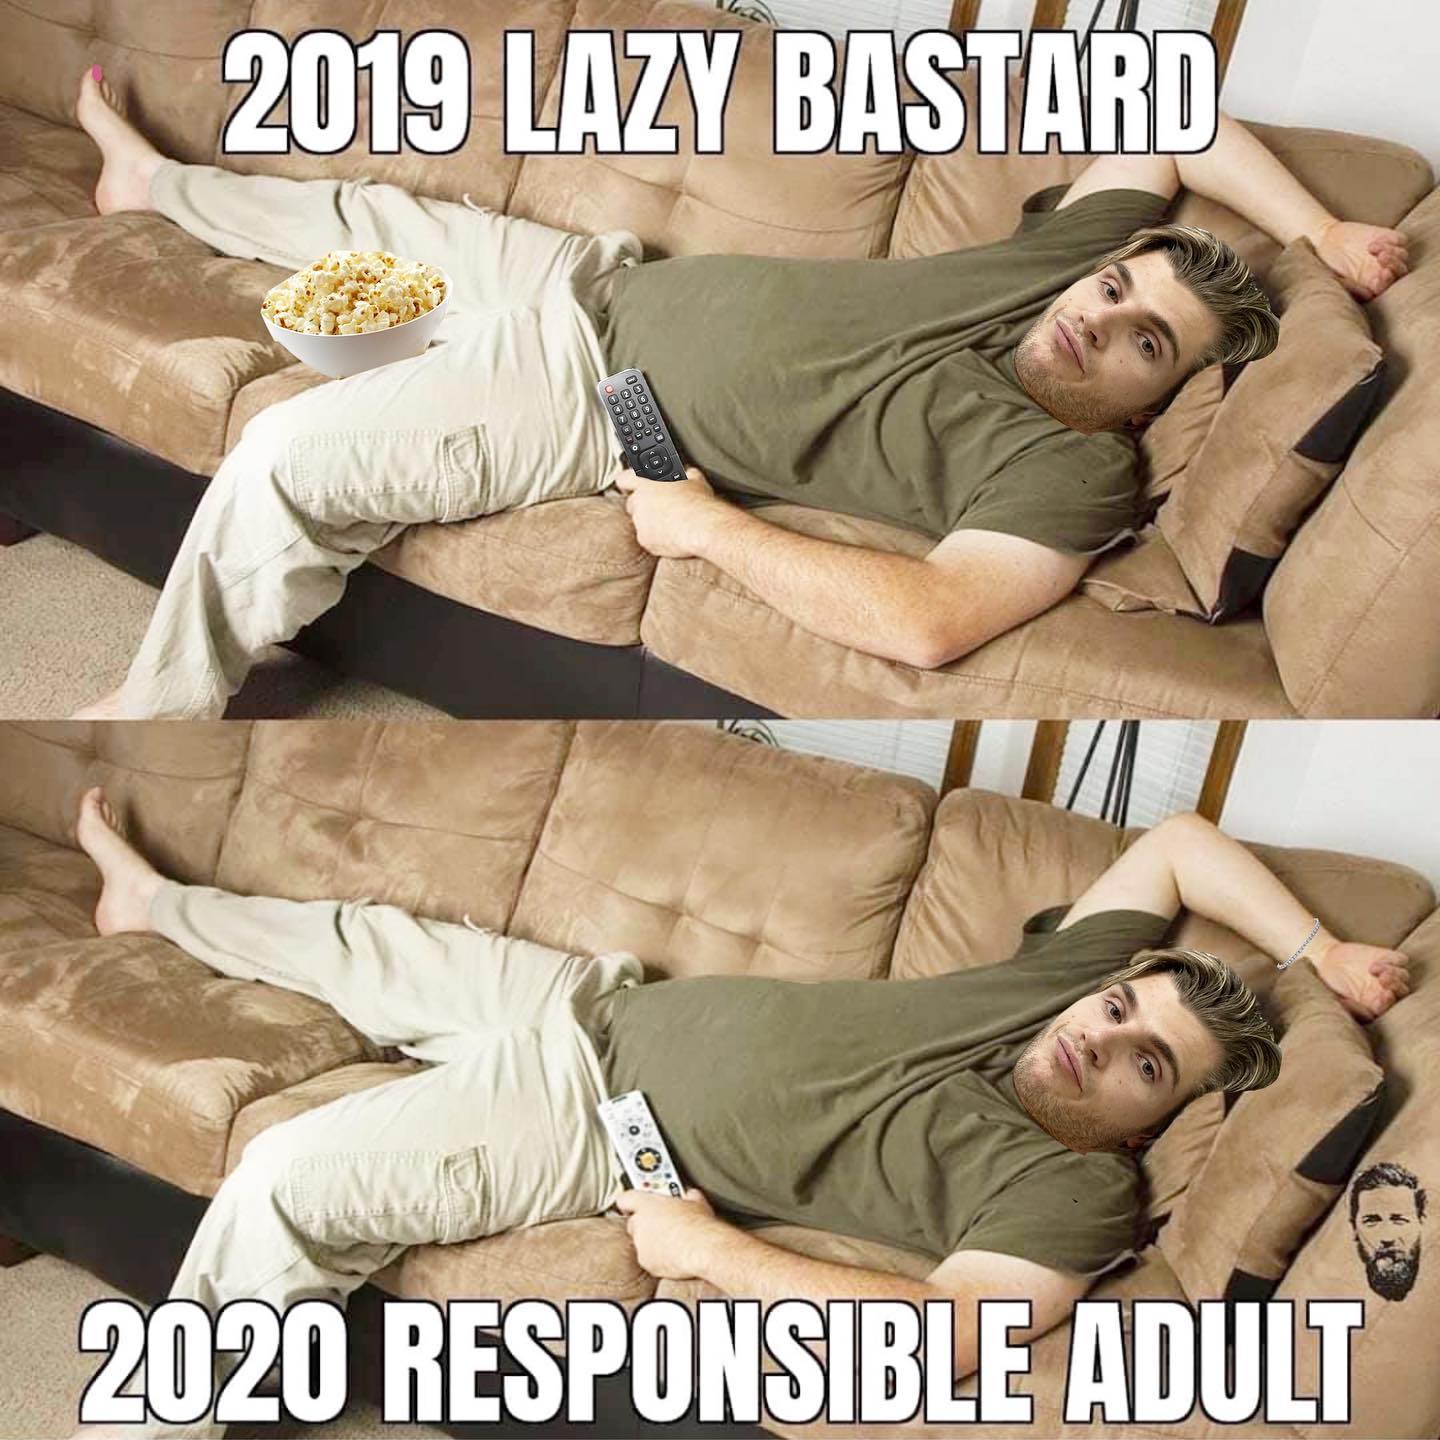 2019 lazy bastard 2020 responsible - 2019 Lazy Bastard 2020 Responsible Adult